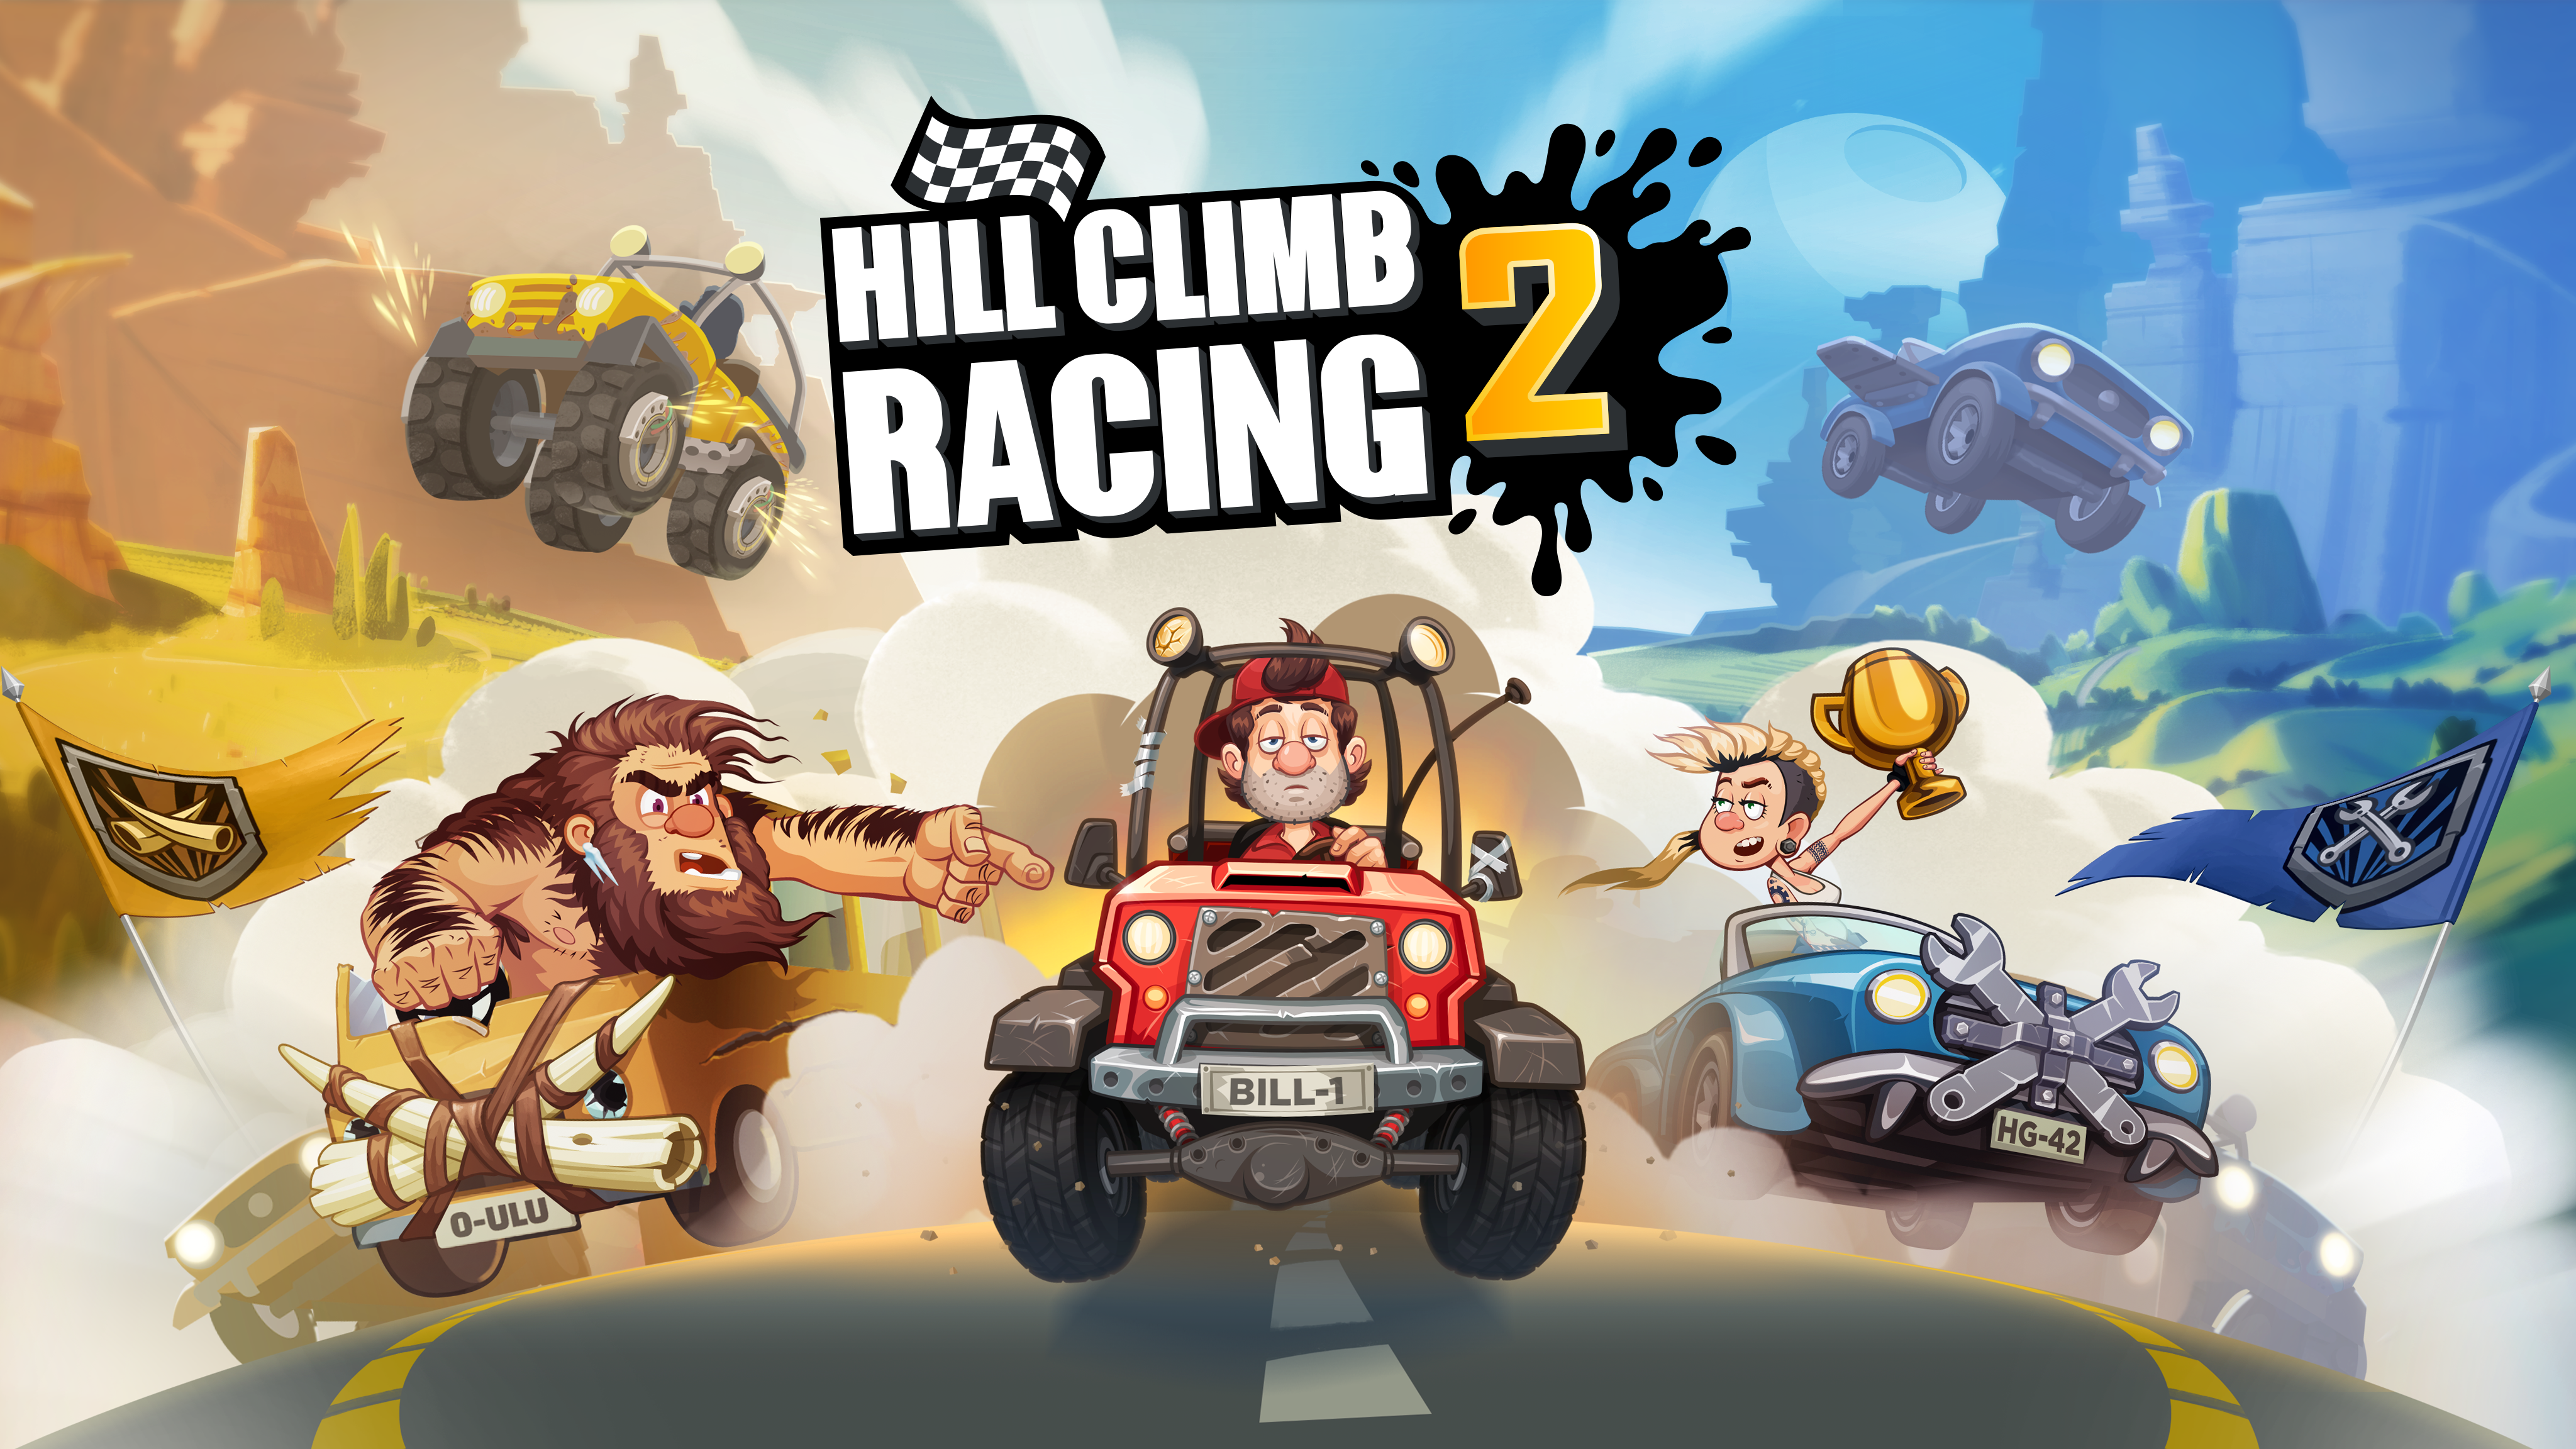 Hill climb racing 2 версия 1.59 5. Хилл климб рейсинг 2. Хилл климб рейсинг 1. Хилл климб рейсинг 2 последняя версия. Хилл Клаймб рейсинг.